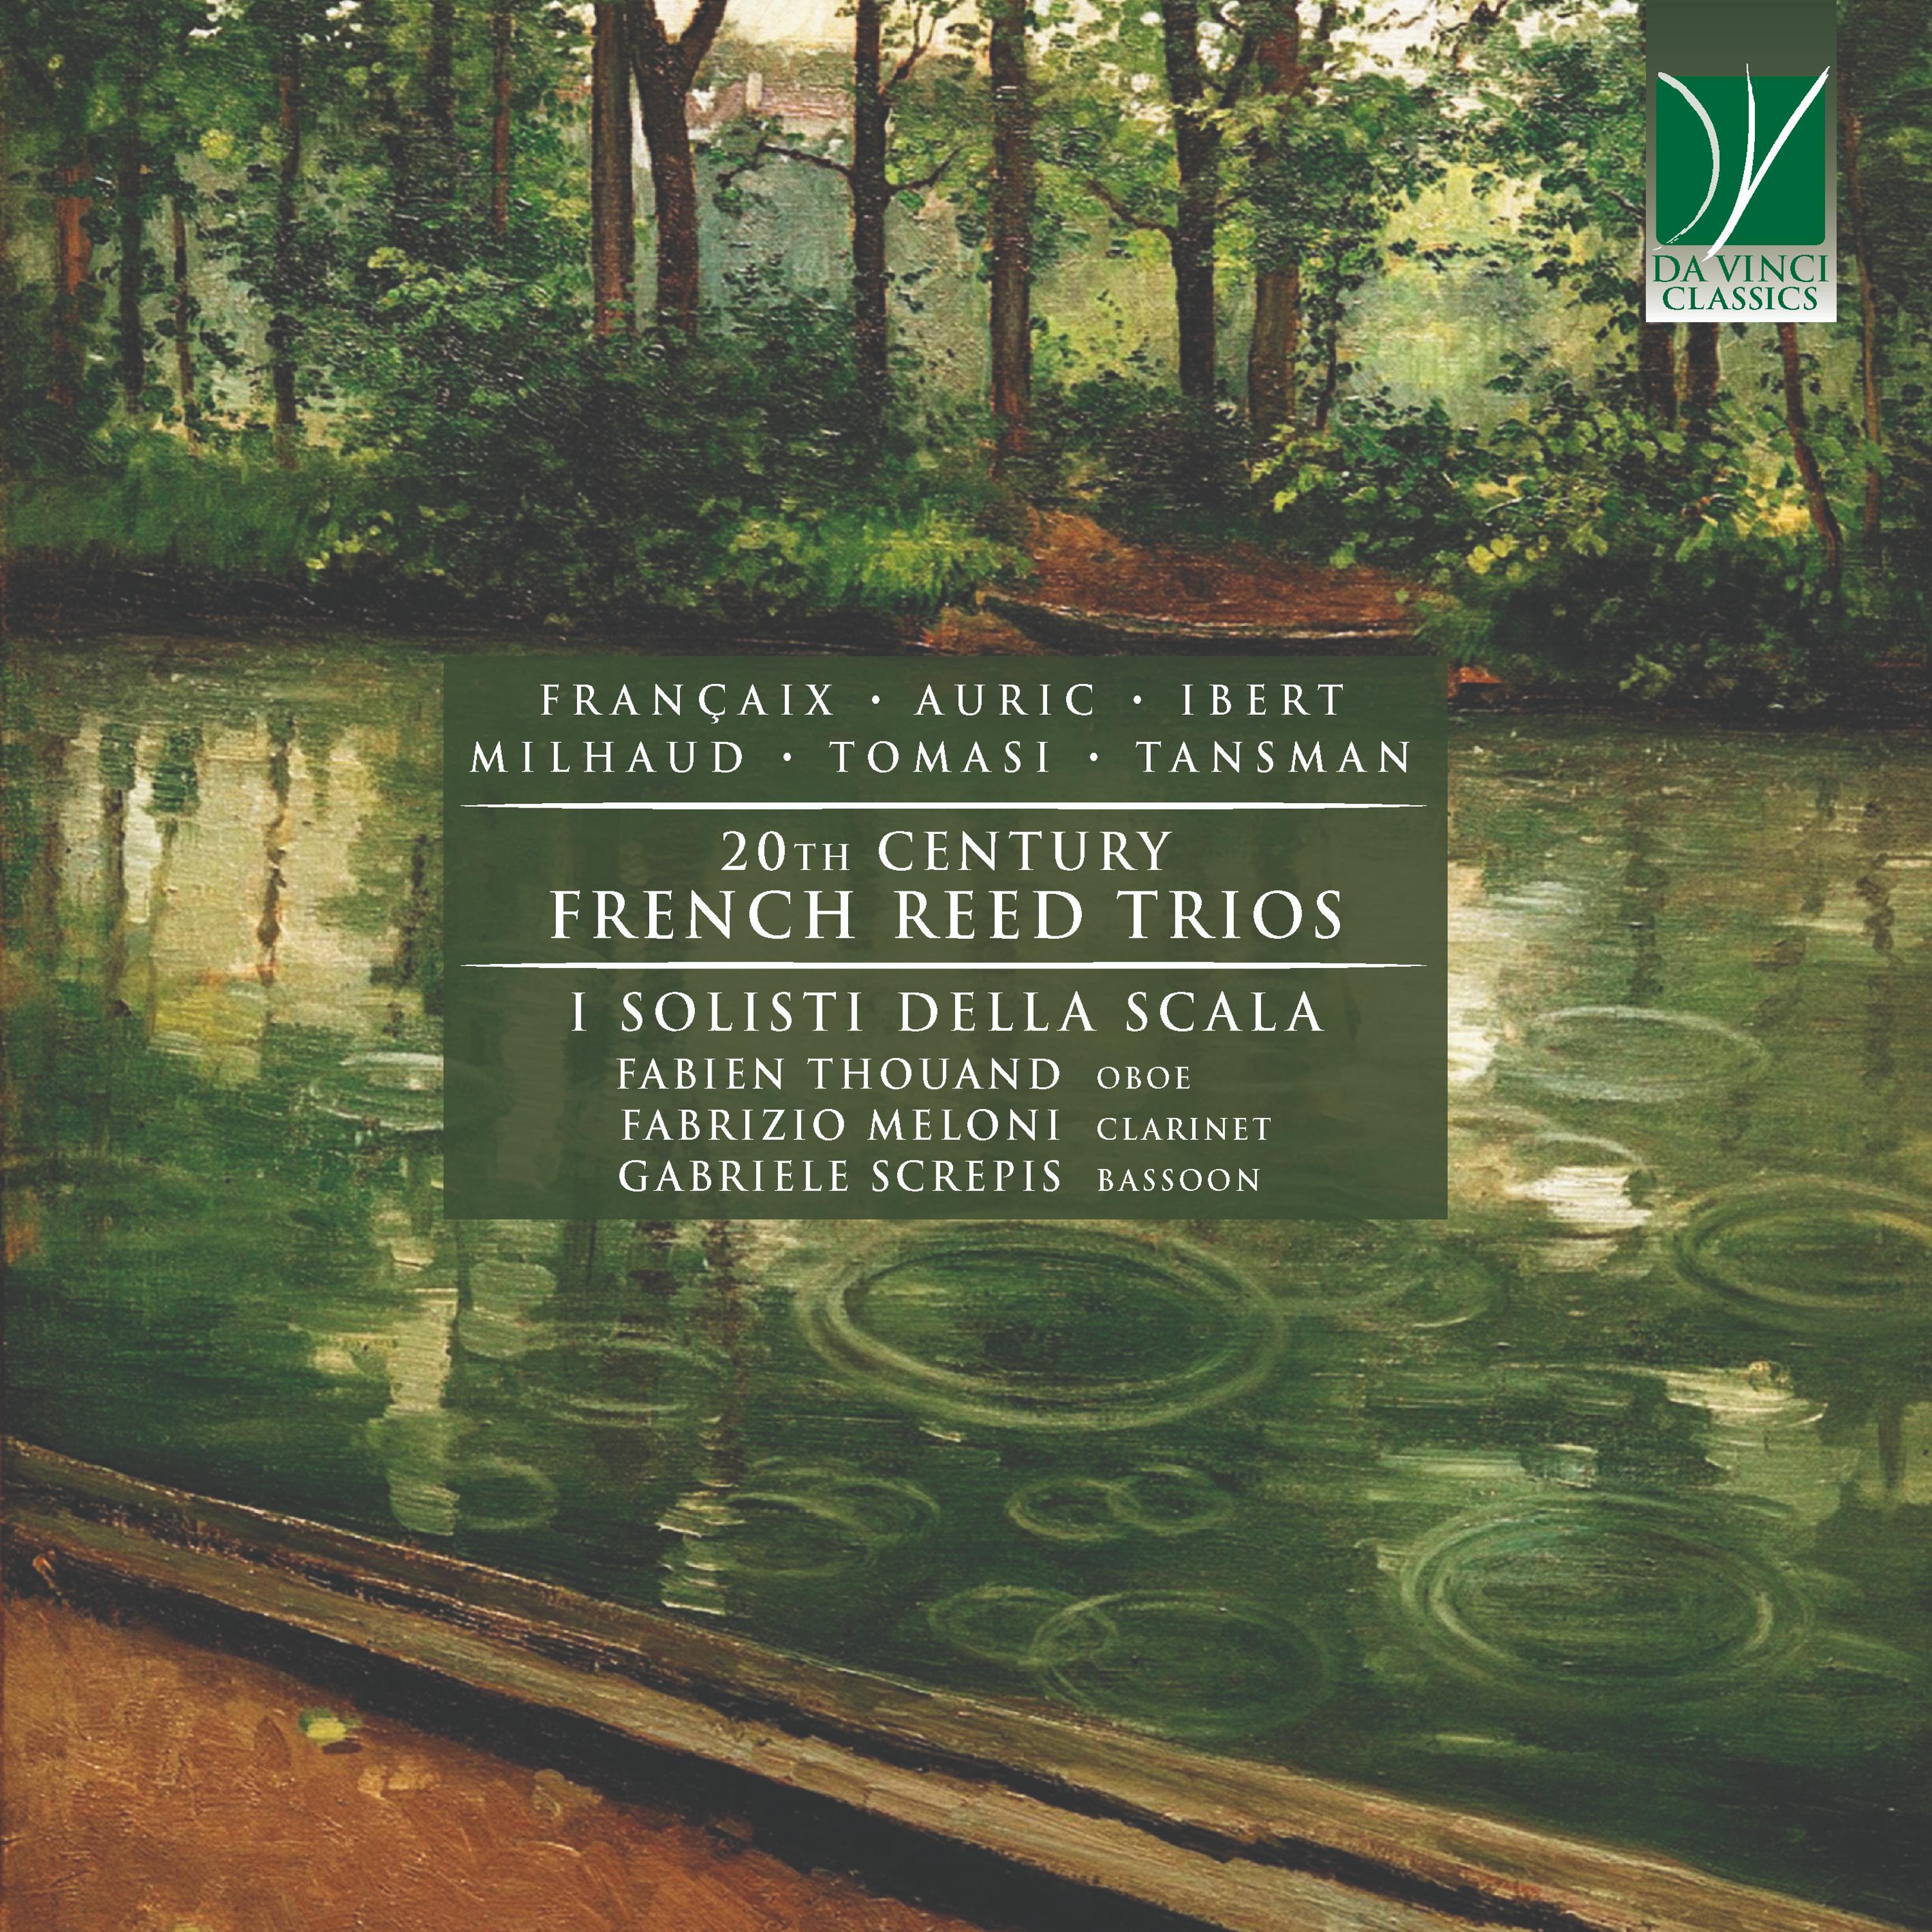 Fabien Thouand - Suite d'après Corrette, Op. 161:II. Tambourin